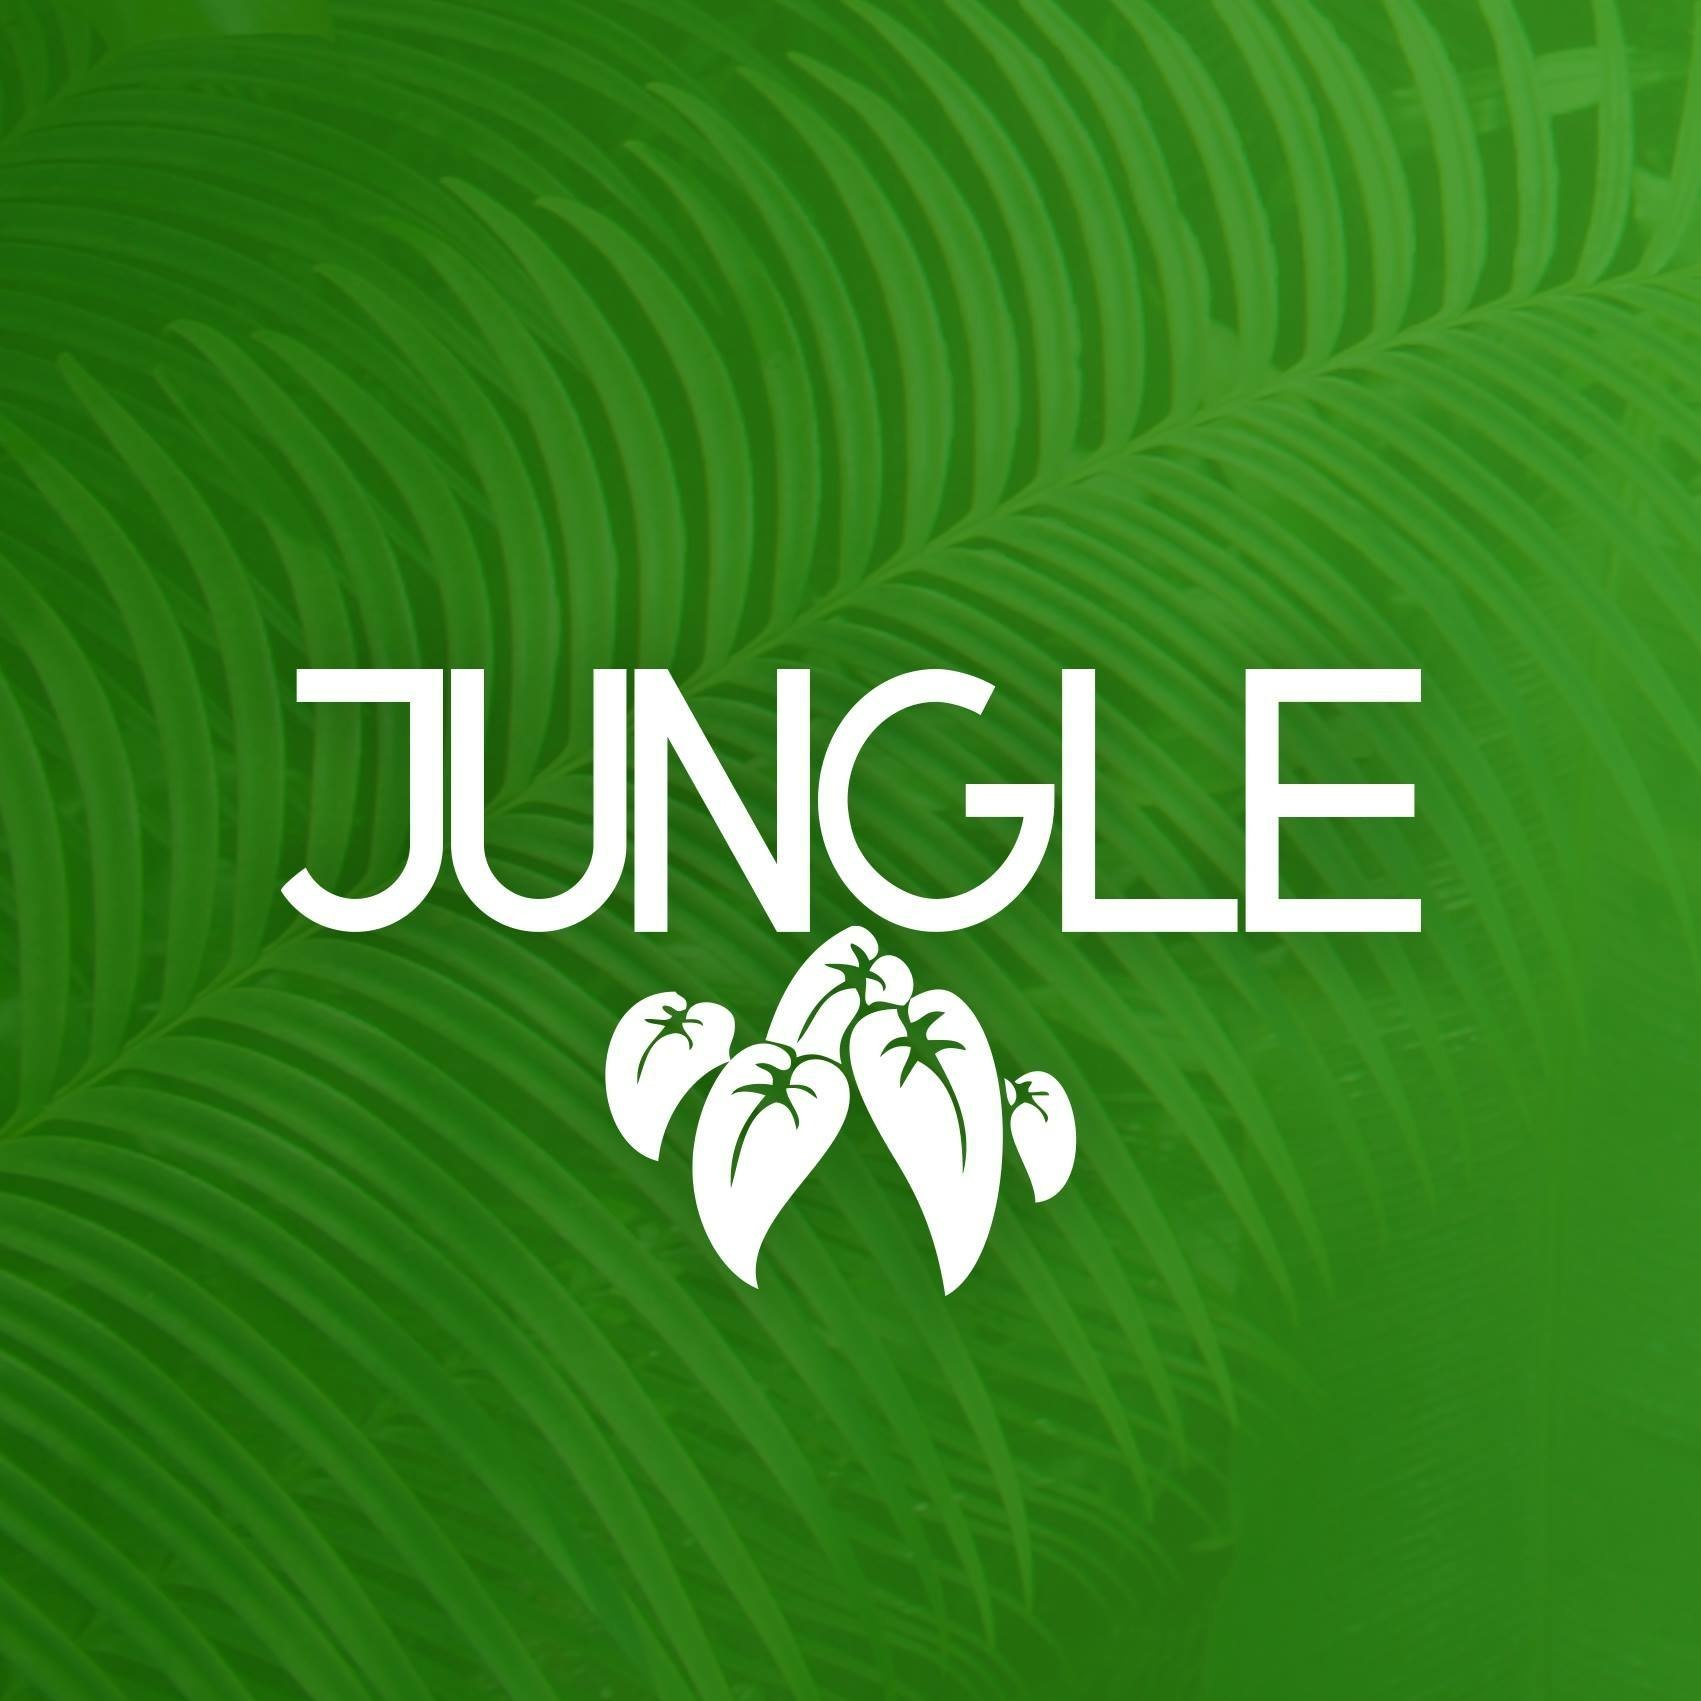 Ин джангл. Джунгли логотип. Клуб джунгли. Кафе джунгли логотип. Jungle надпись.